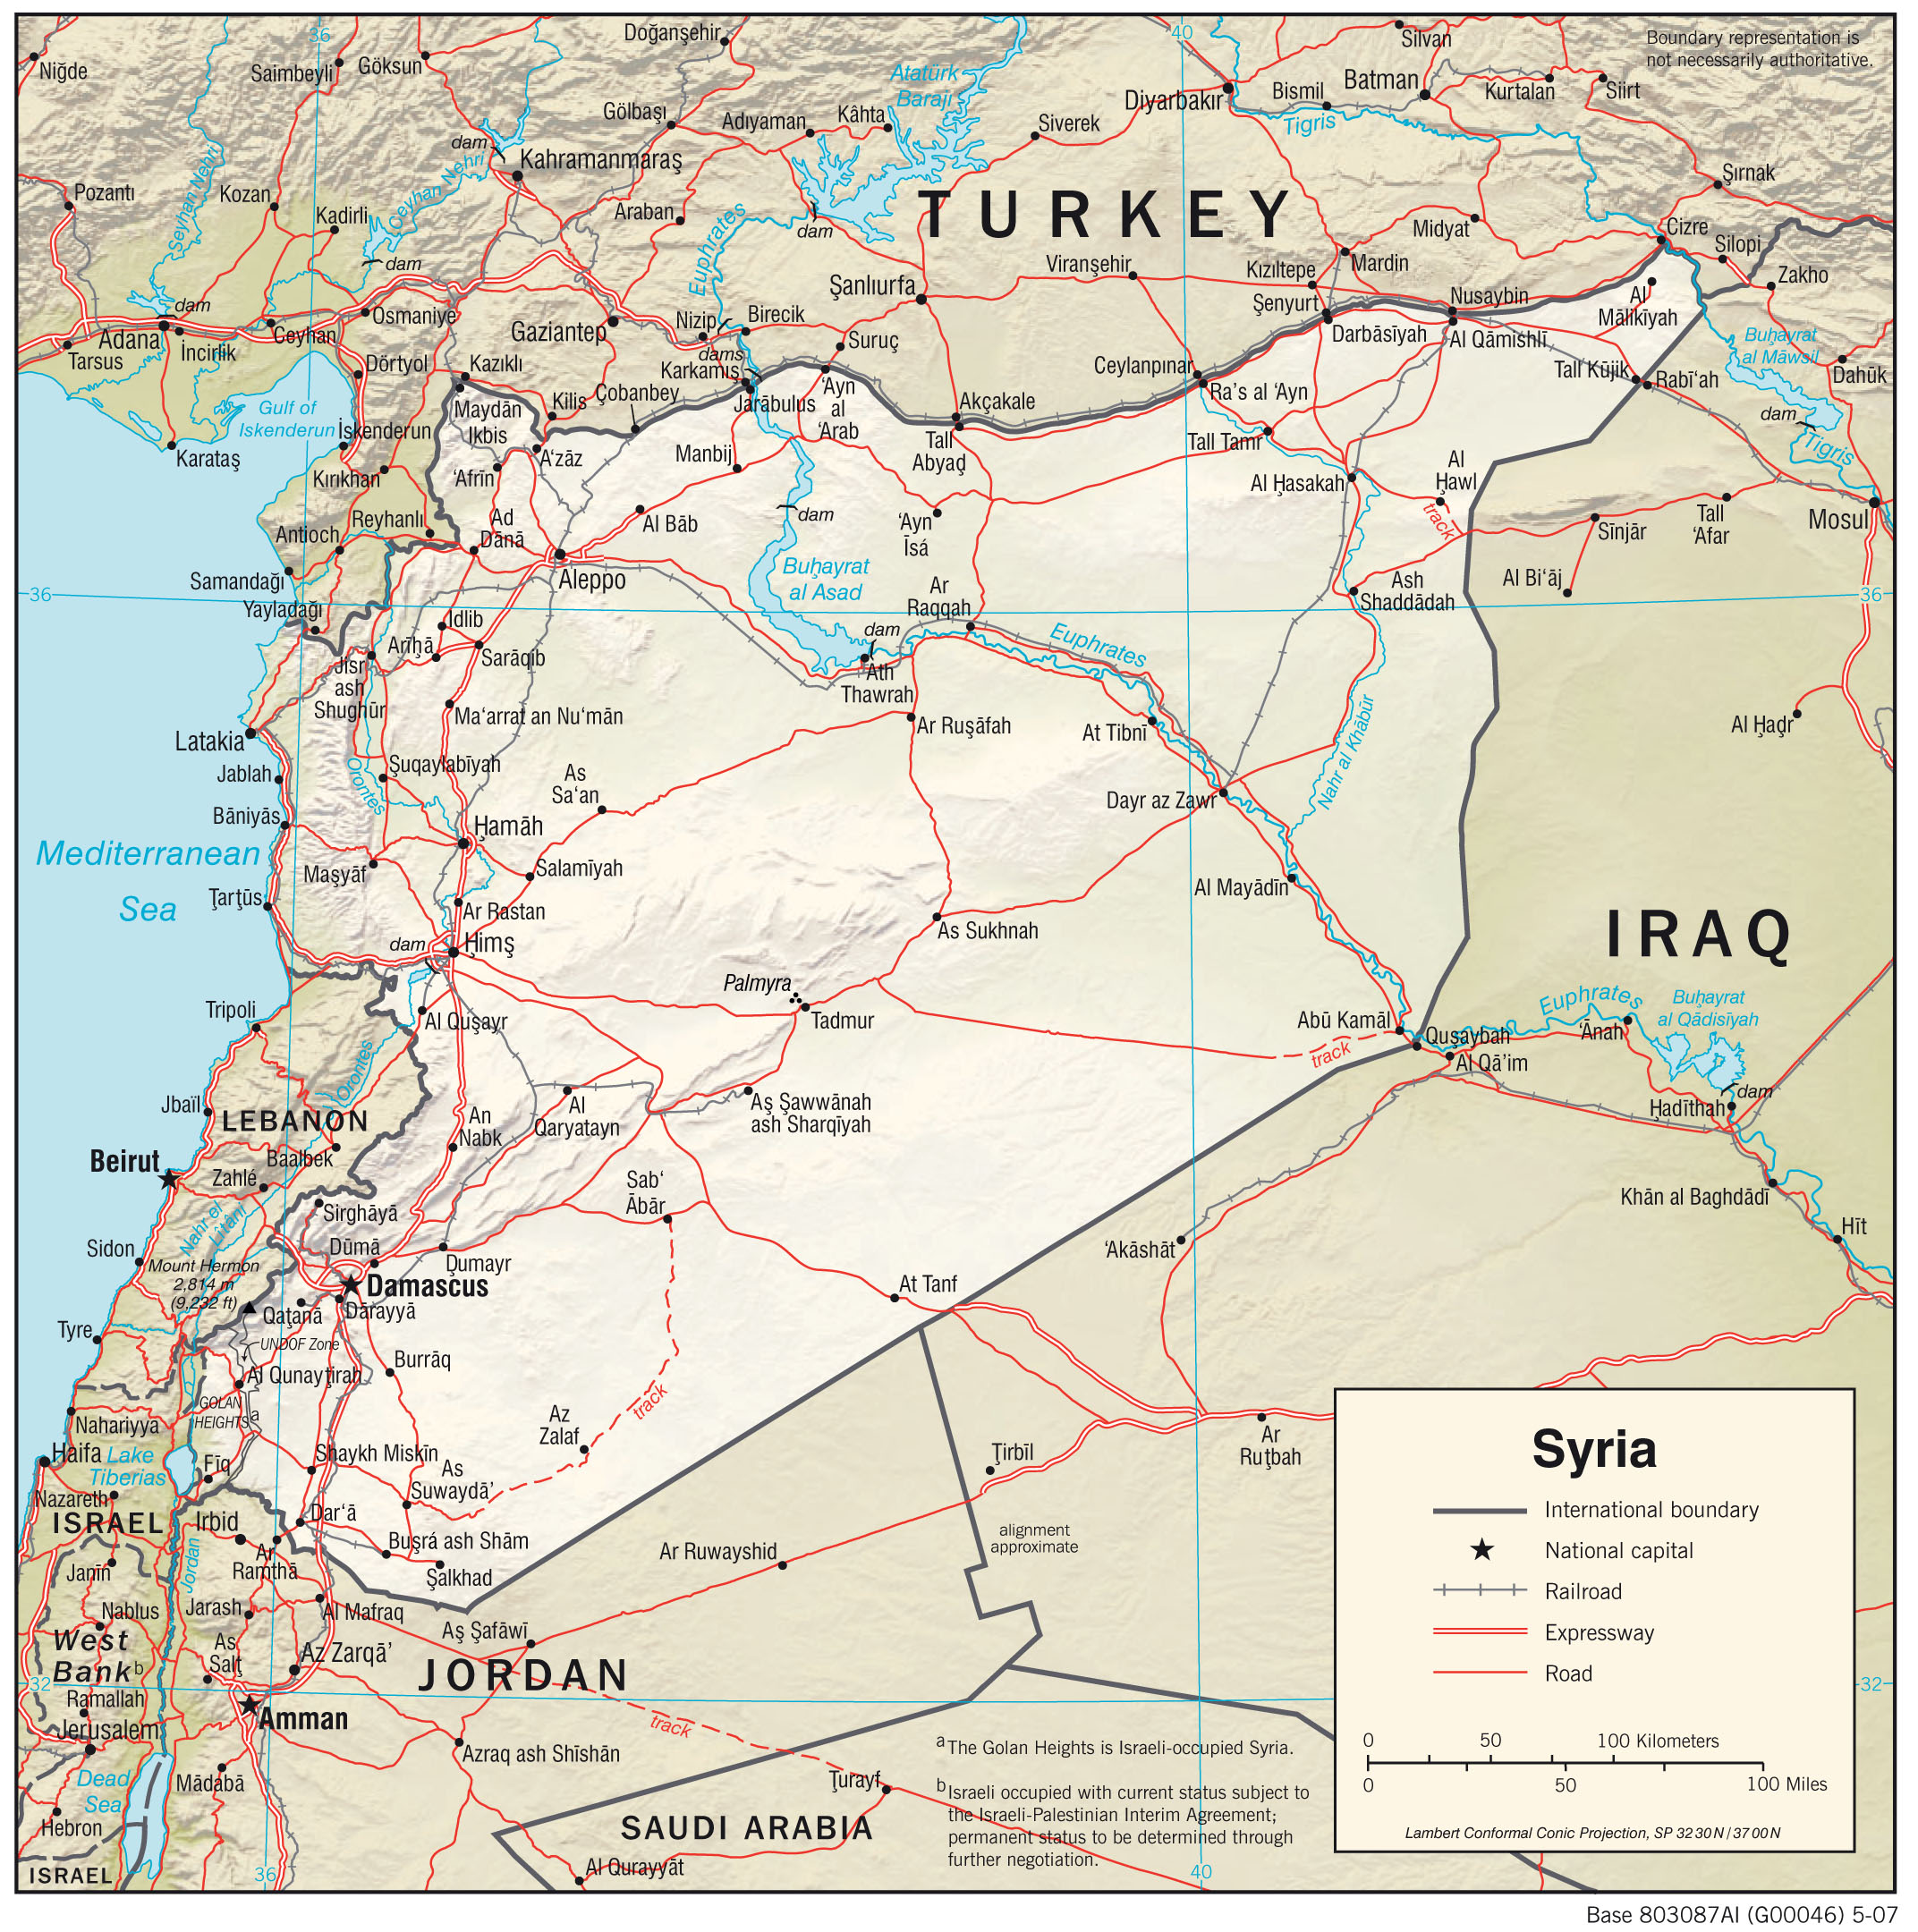 www.lib.utexas.edu_maps_middle_east_and_asia_syria_rel_2007.jpg